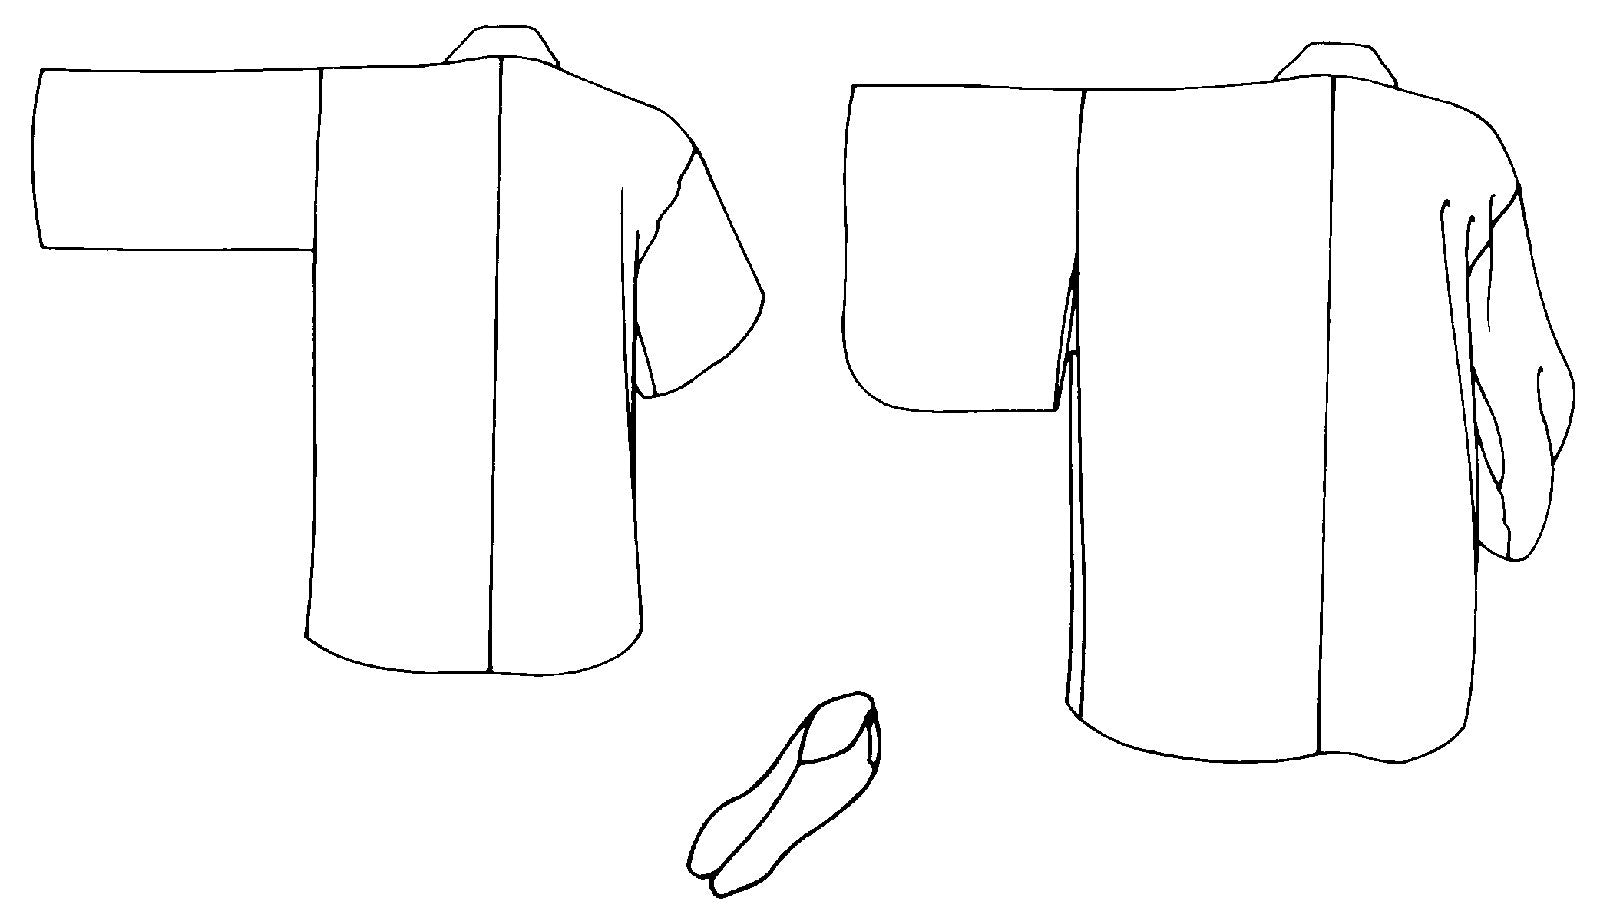 Flat line drawings of backs of Hapi and Haori and Tabi. 